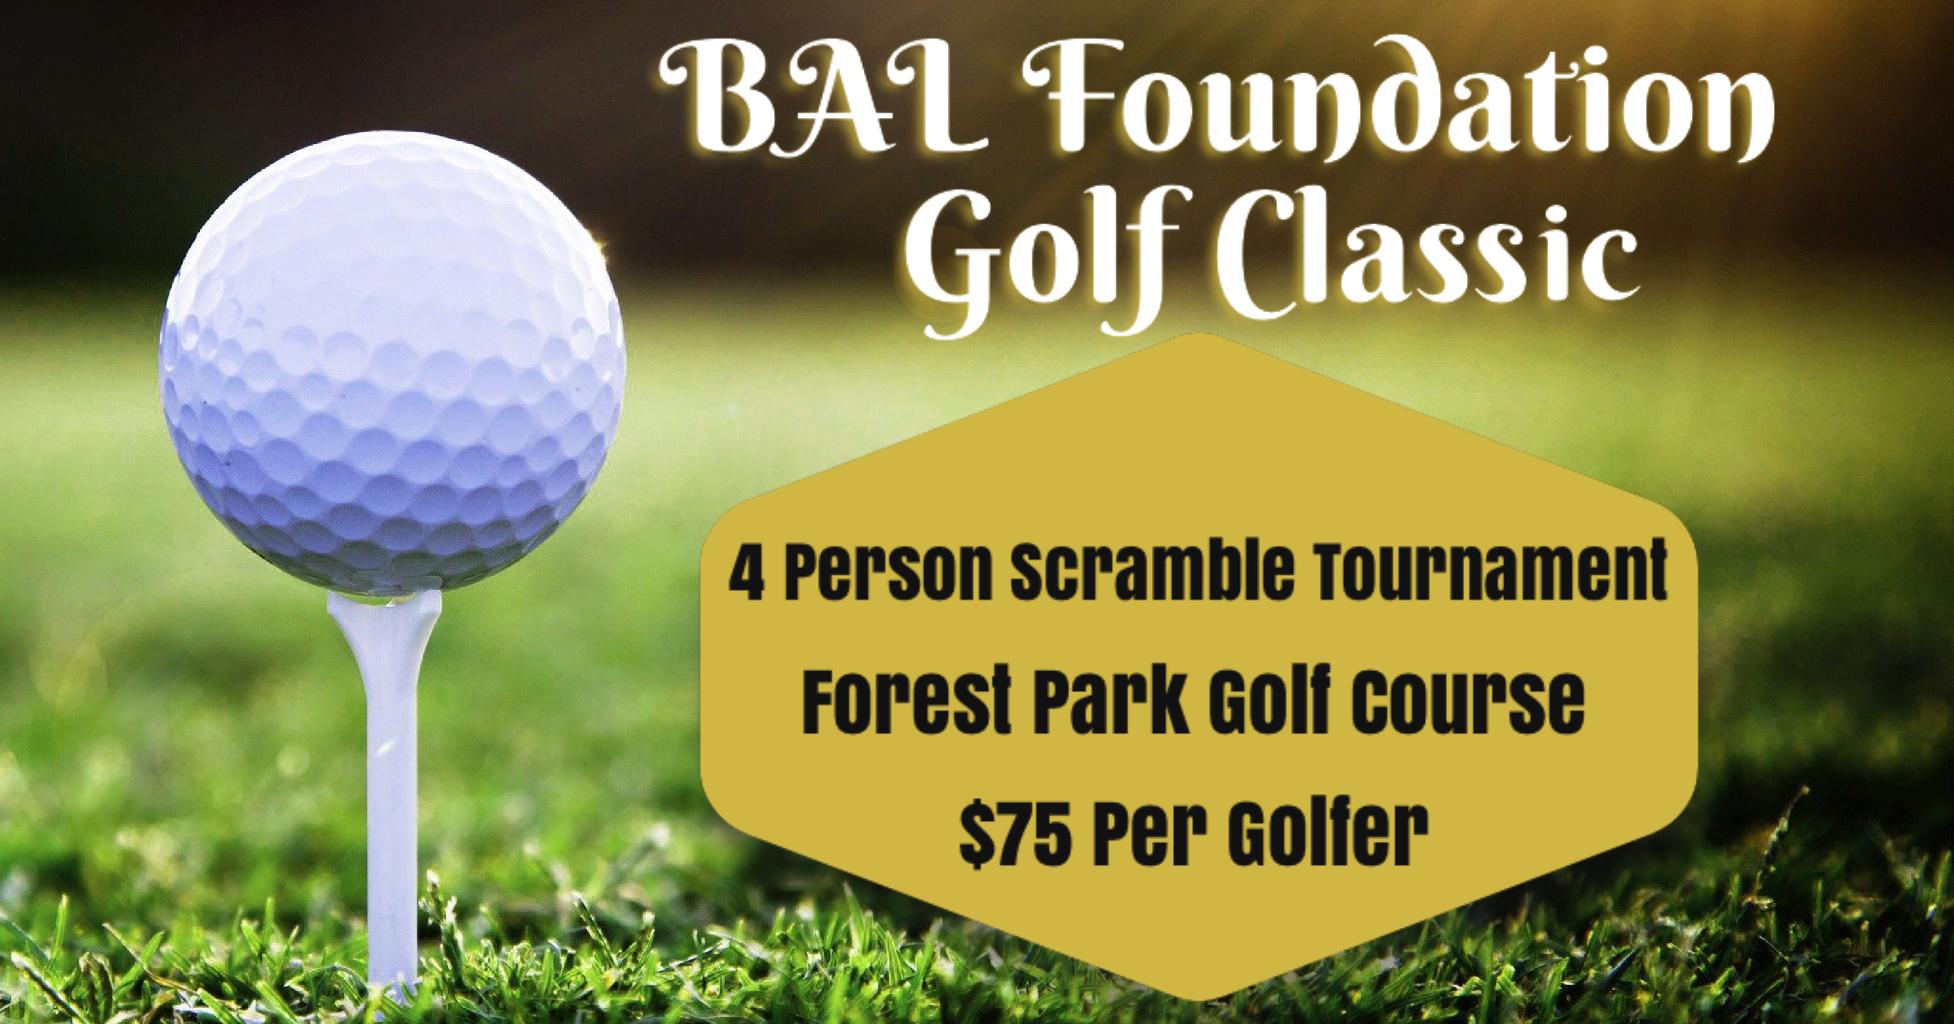 BAL Foundation Golf Classic